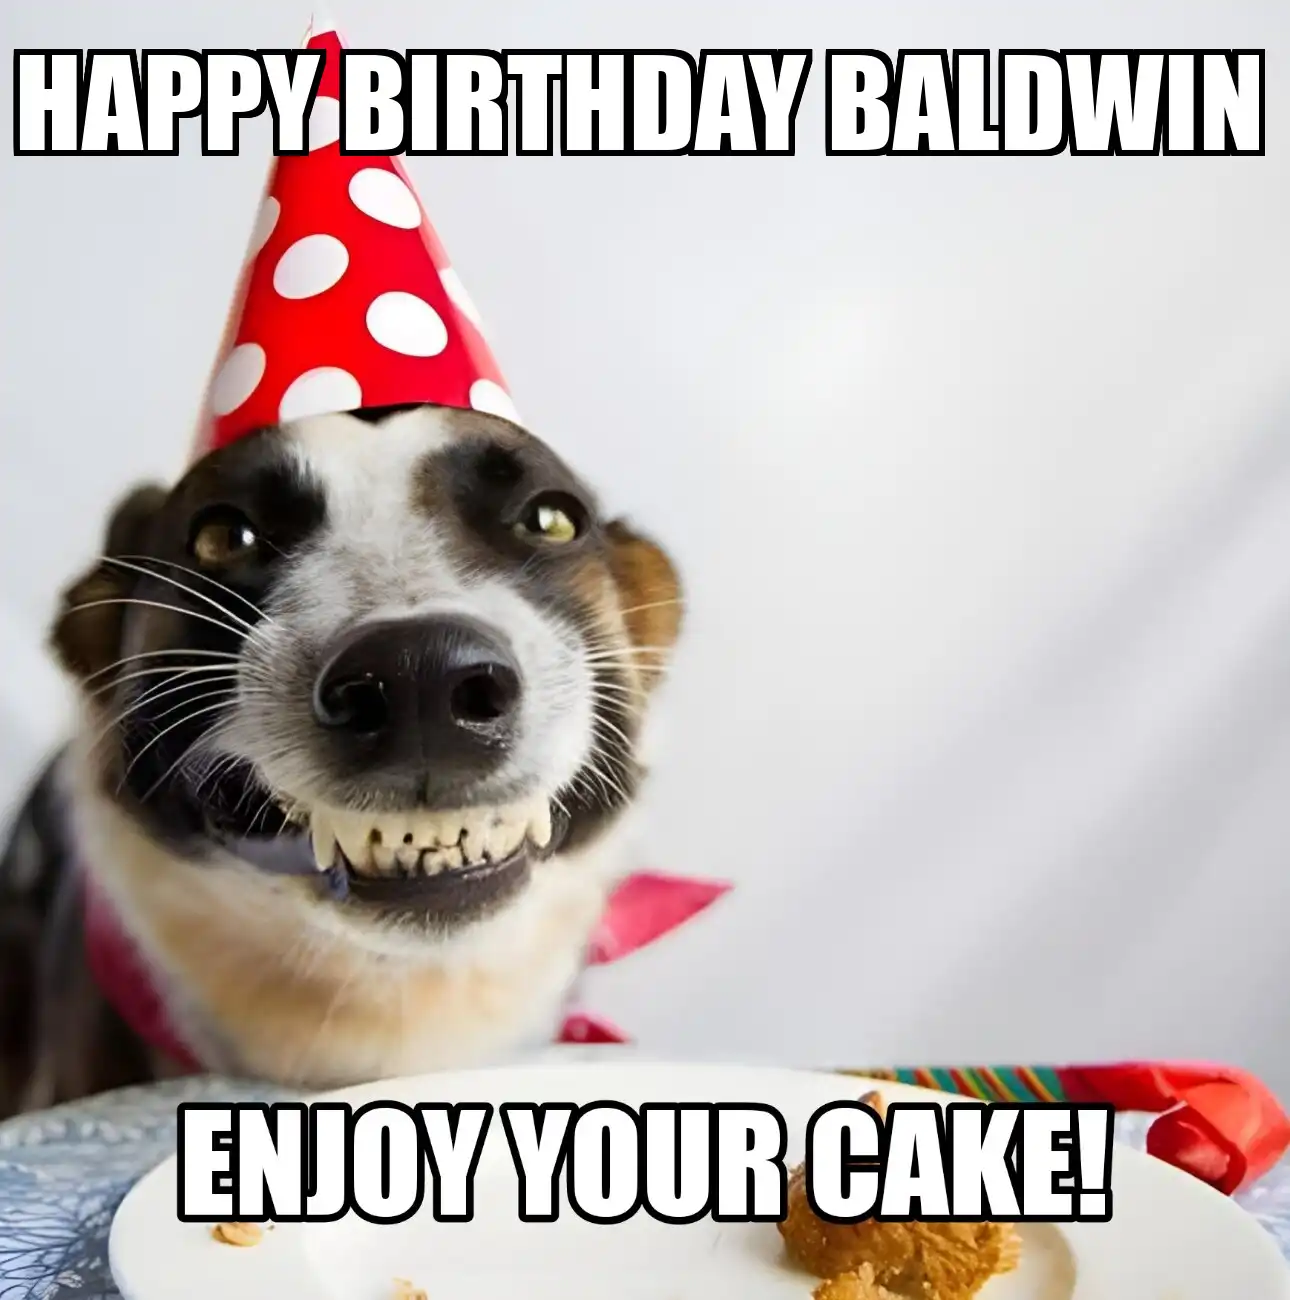 Happy Birthday Baldwin Enjoy Your Cake Dog Meme